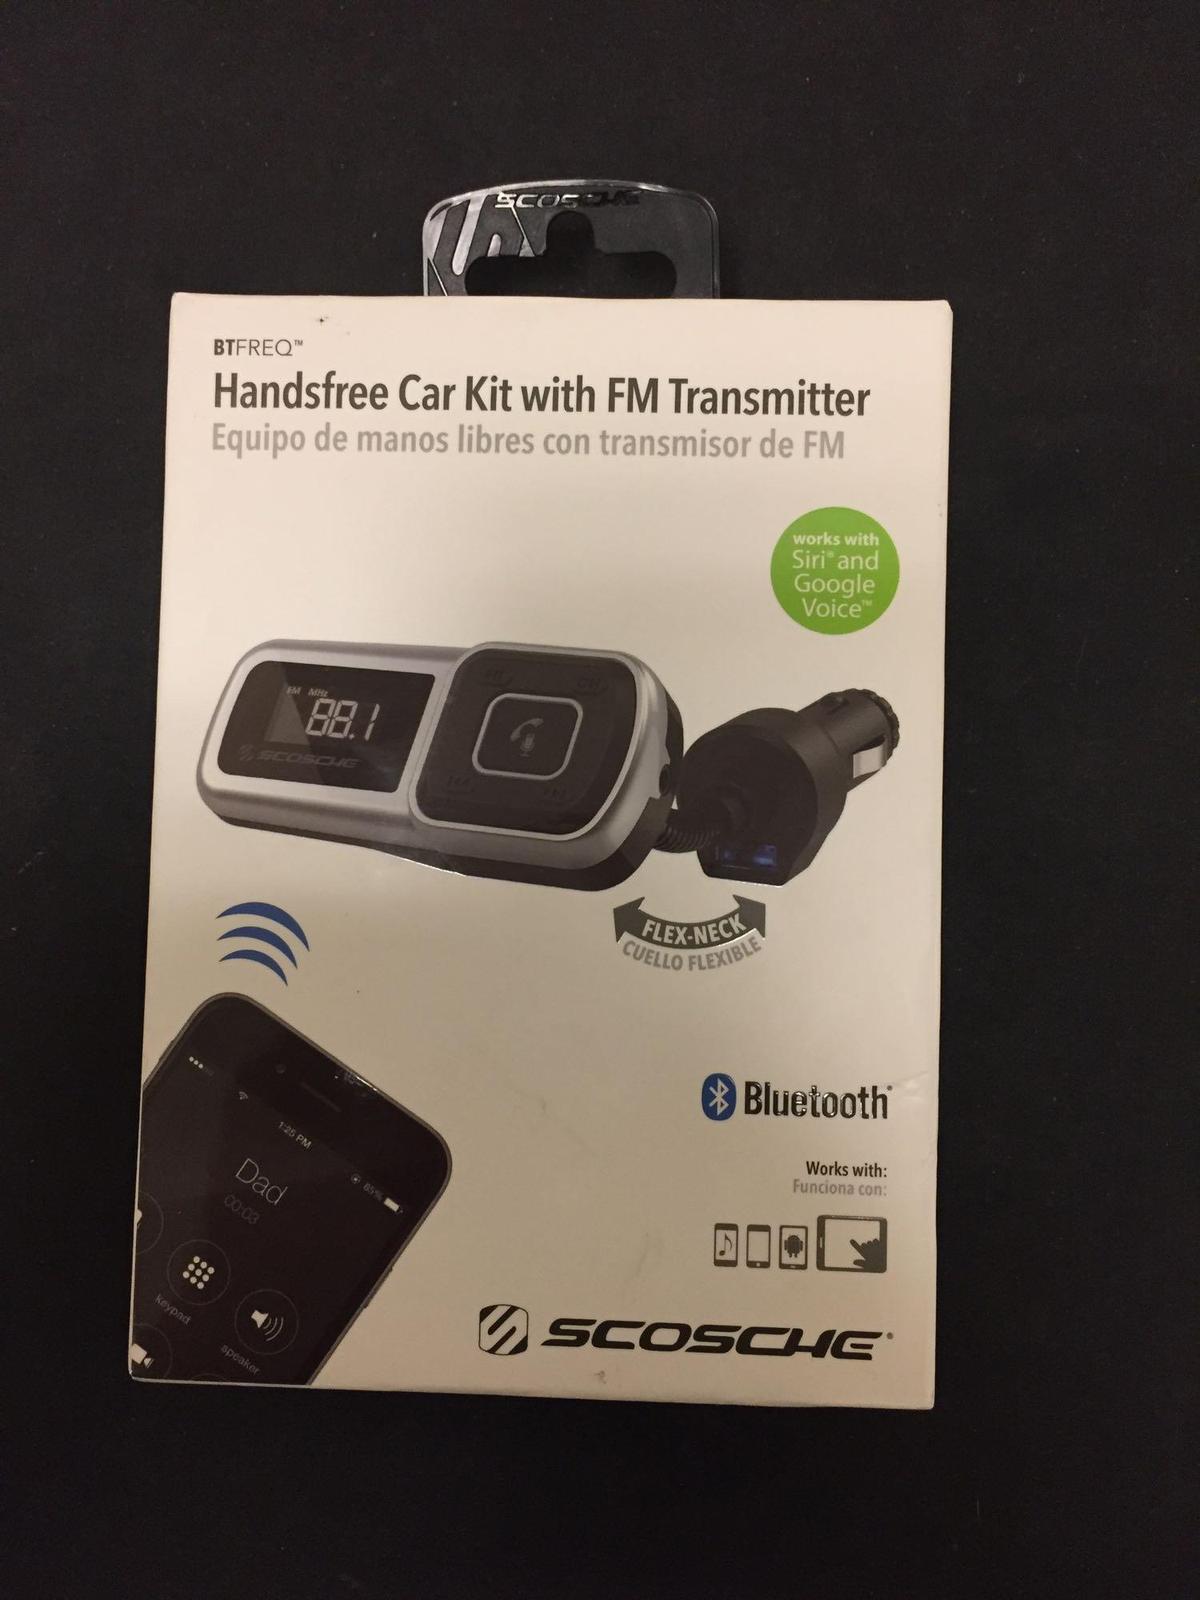 BRAND NEW Scosche Bluetooth Handsfree Car Kit with FM Transmitter in Original Box